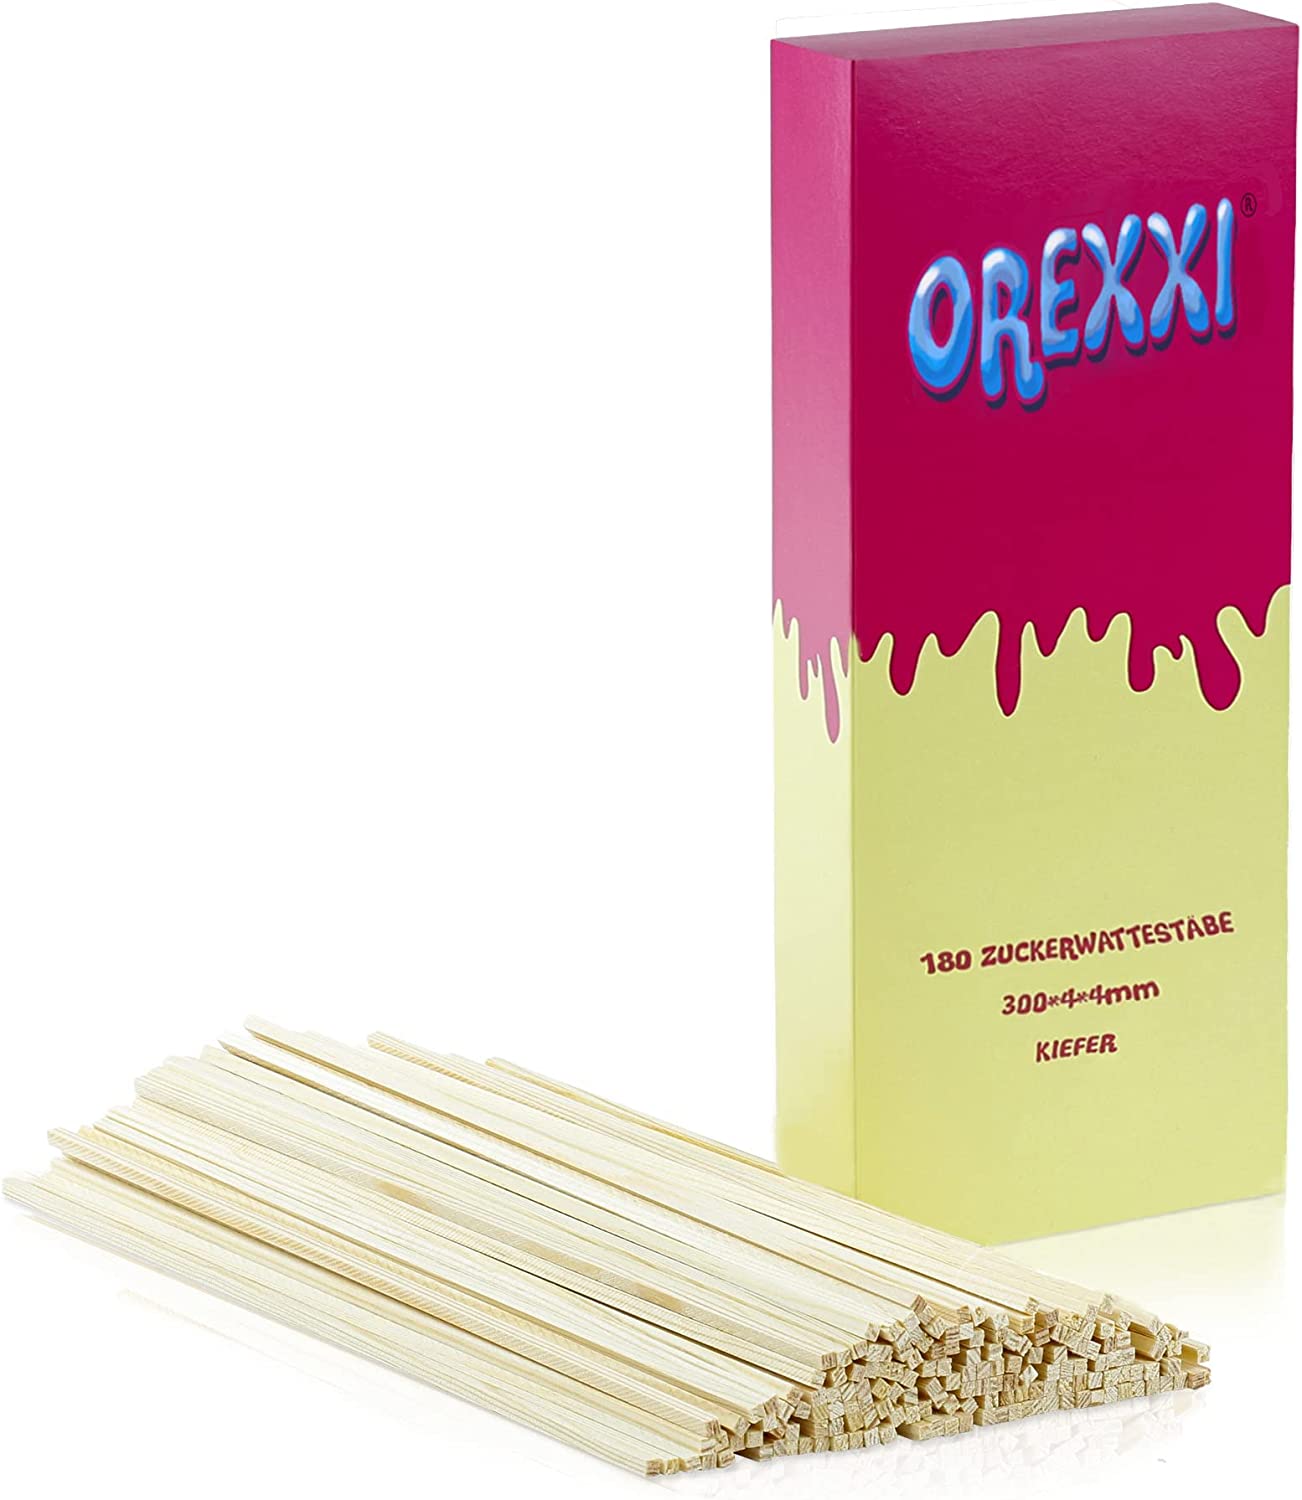 OREXXI Candy Floss Sticks - 180 | 60 Candy Floss Sticks 30 cm for Candy Floss Machine Home - Shatter-Free Sticks for Candy Floss